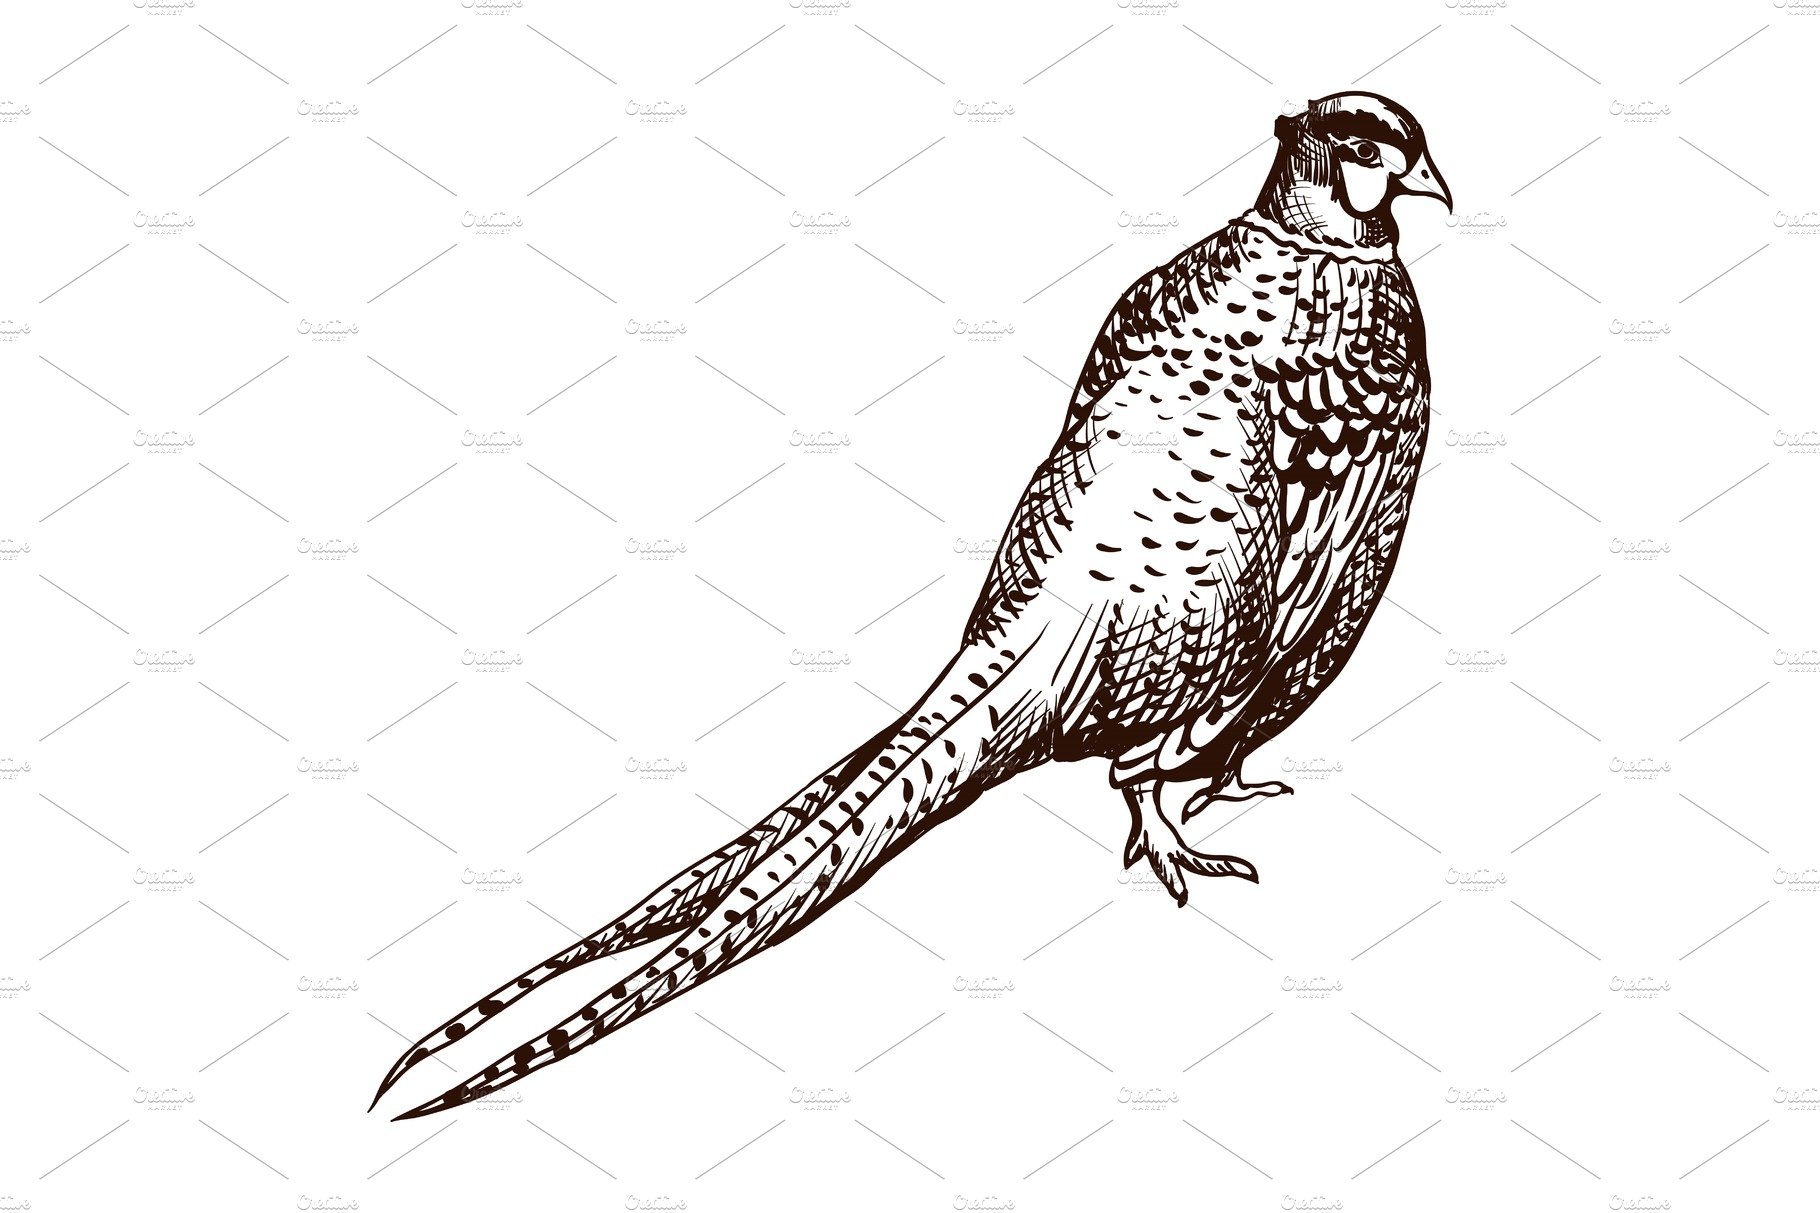 Antique engraving pheasant cover image.